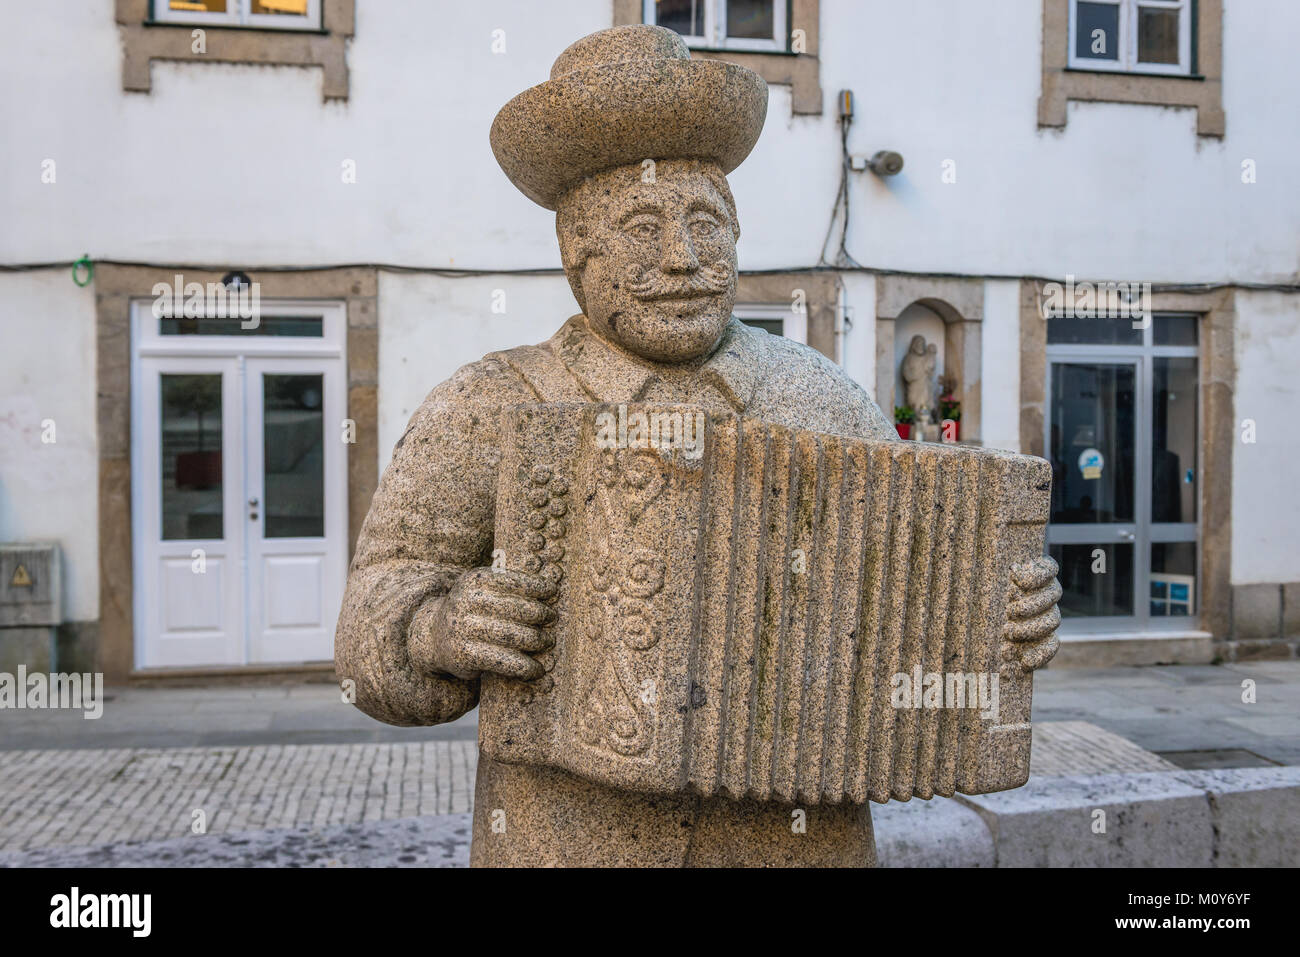 Accordionist statue in Ponte de Lima city, part of the district of Viana do Castelo, Norte region of Portugal Stock Photo